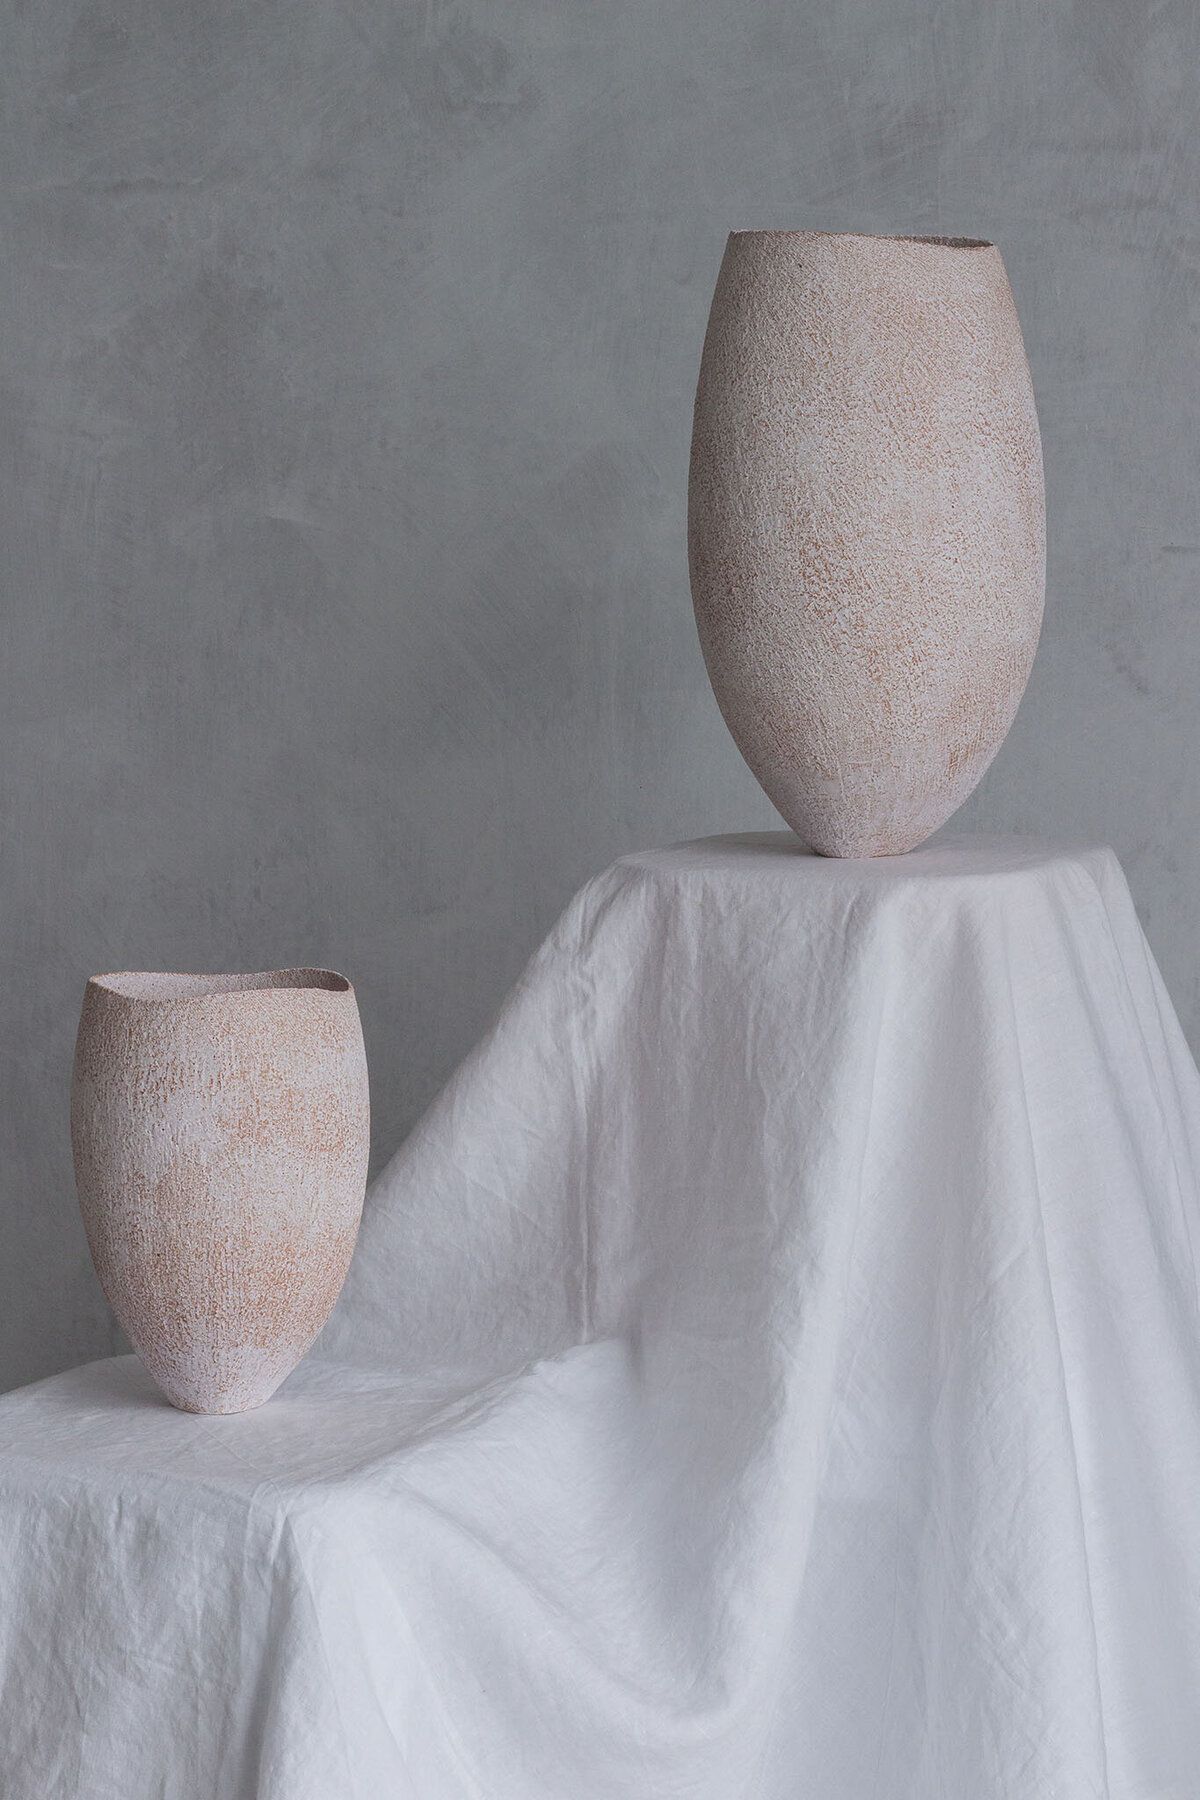 Yasha-Butler-Ceramic-Lithic-Collection-Pergamon-01-2022-9-2048px